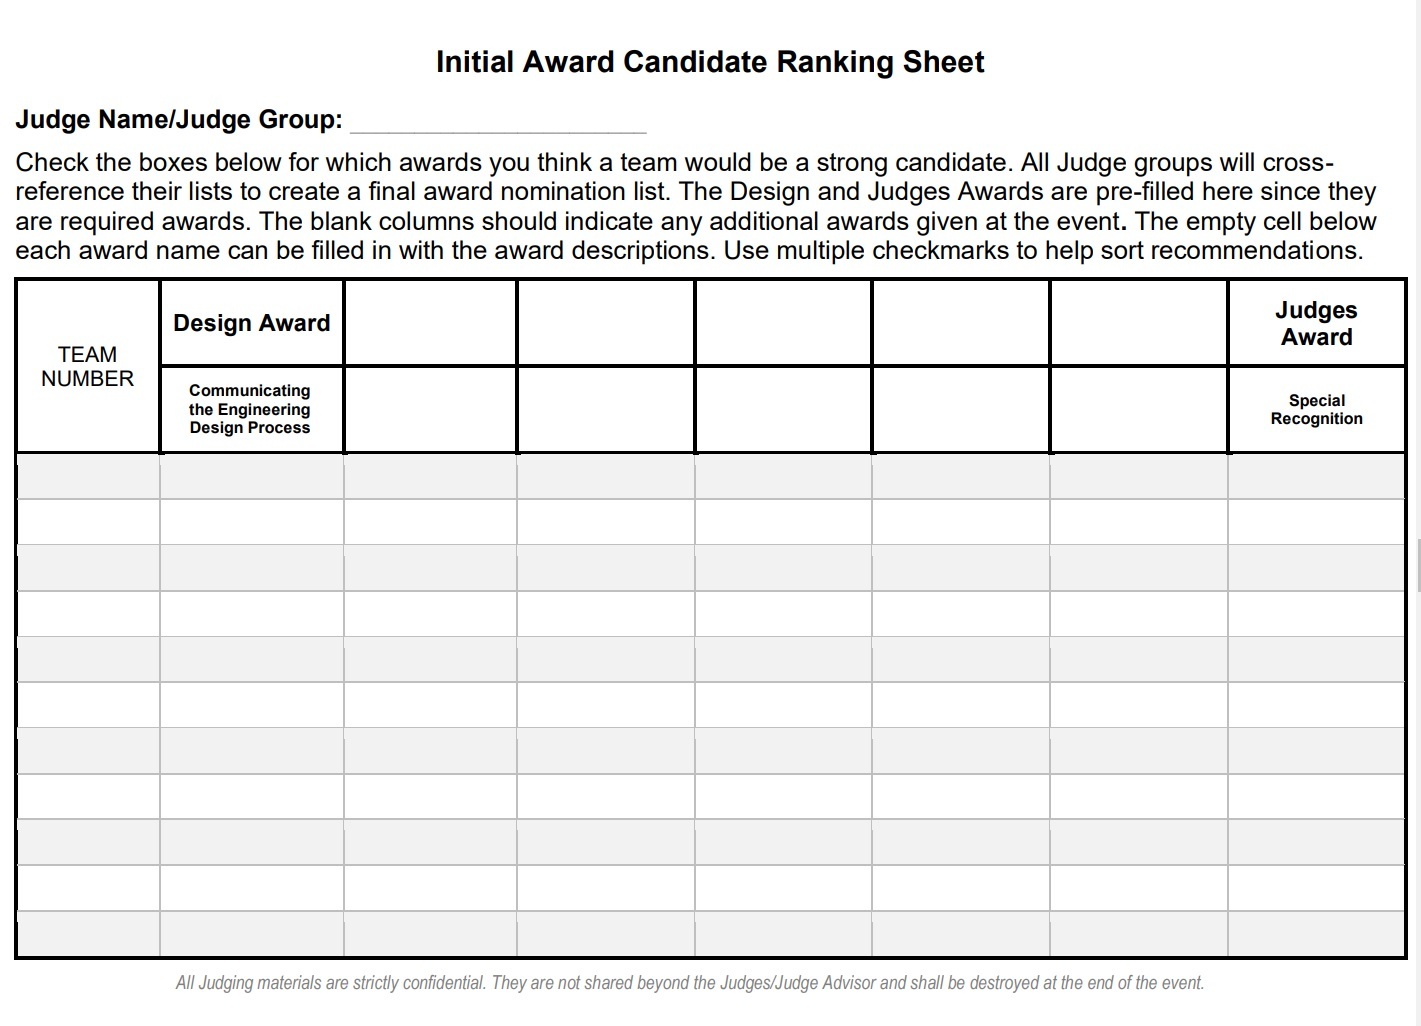 2 Initial Award Candidate Ranking Sheet.jpg